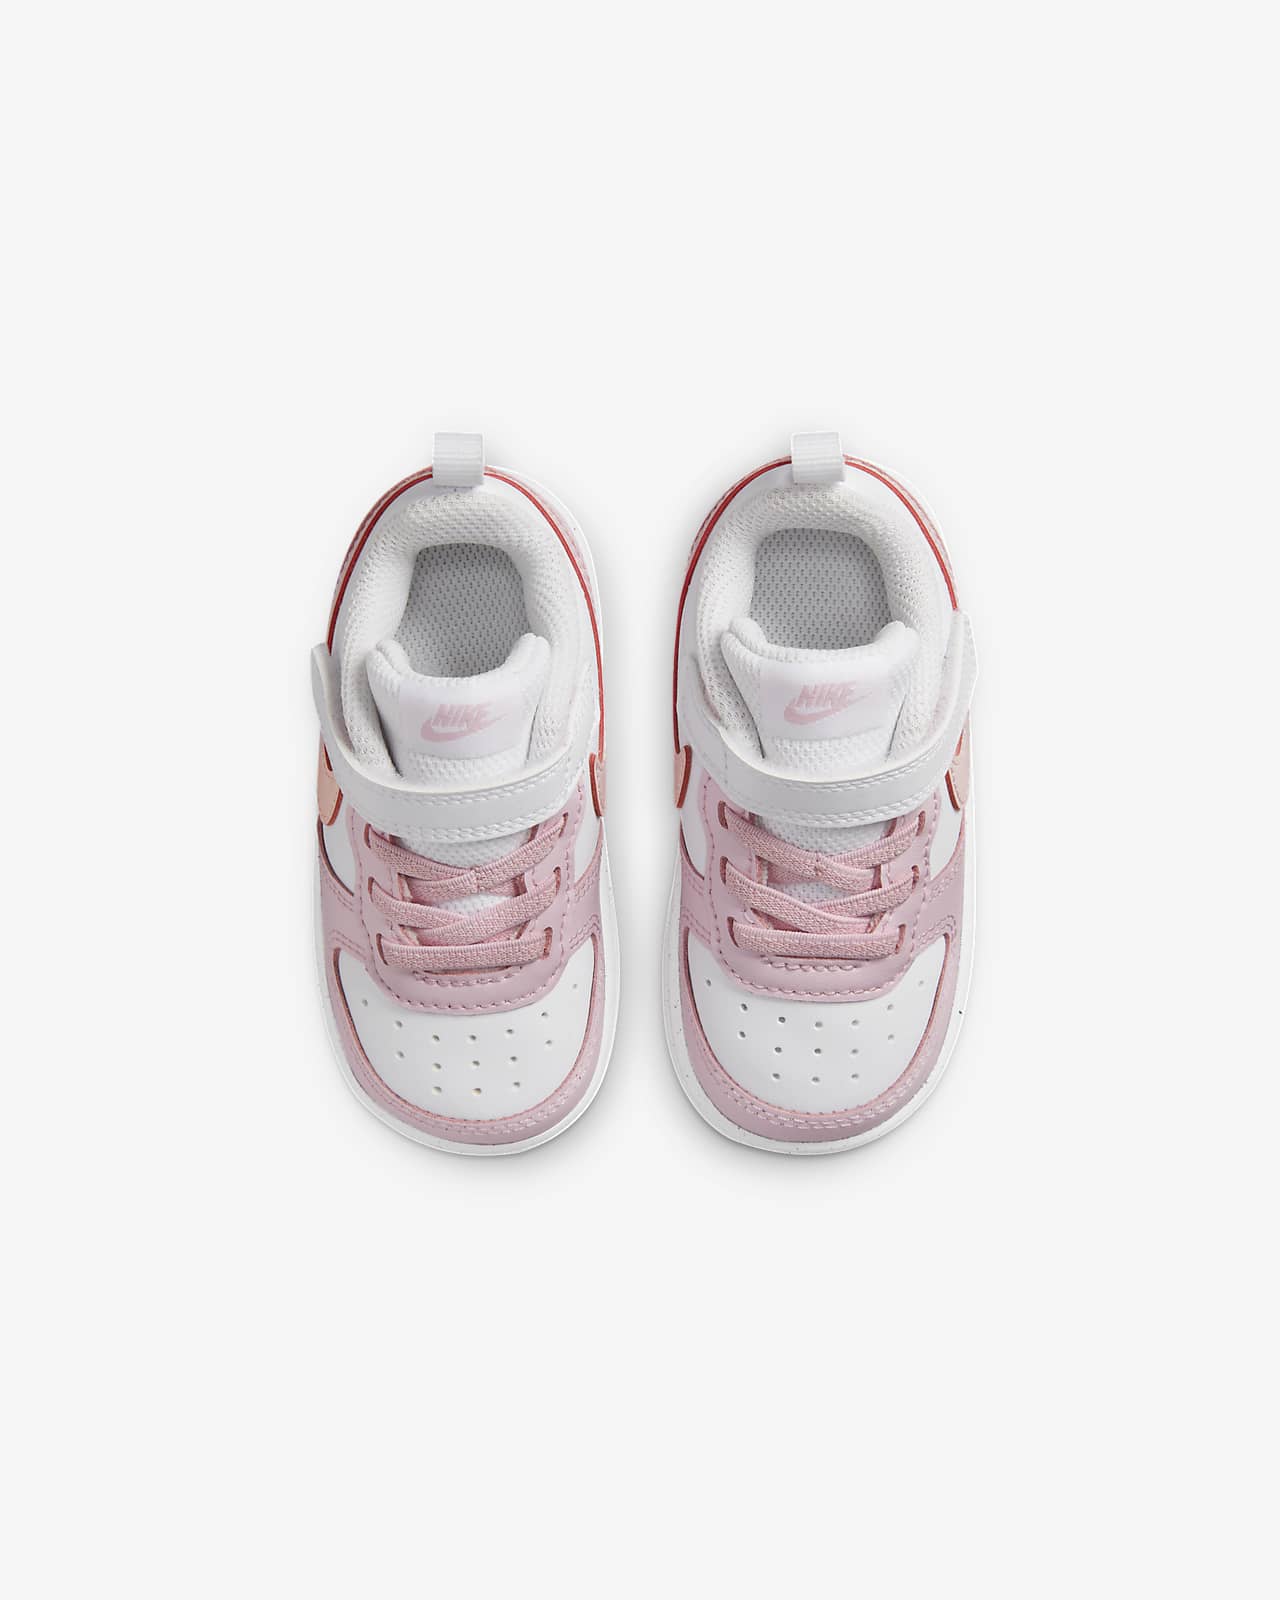 Nike Court Borough Low 2 SE Baby/Toddler Shoes